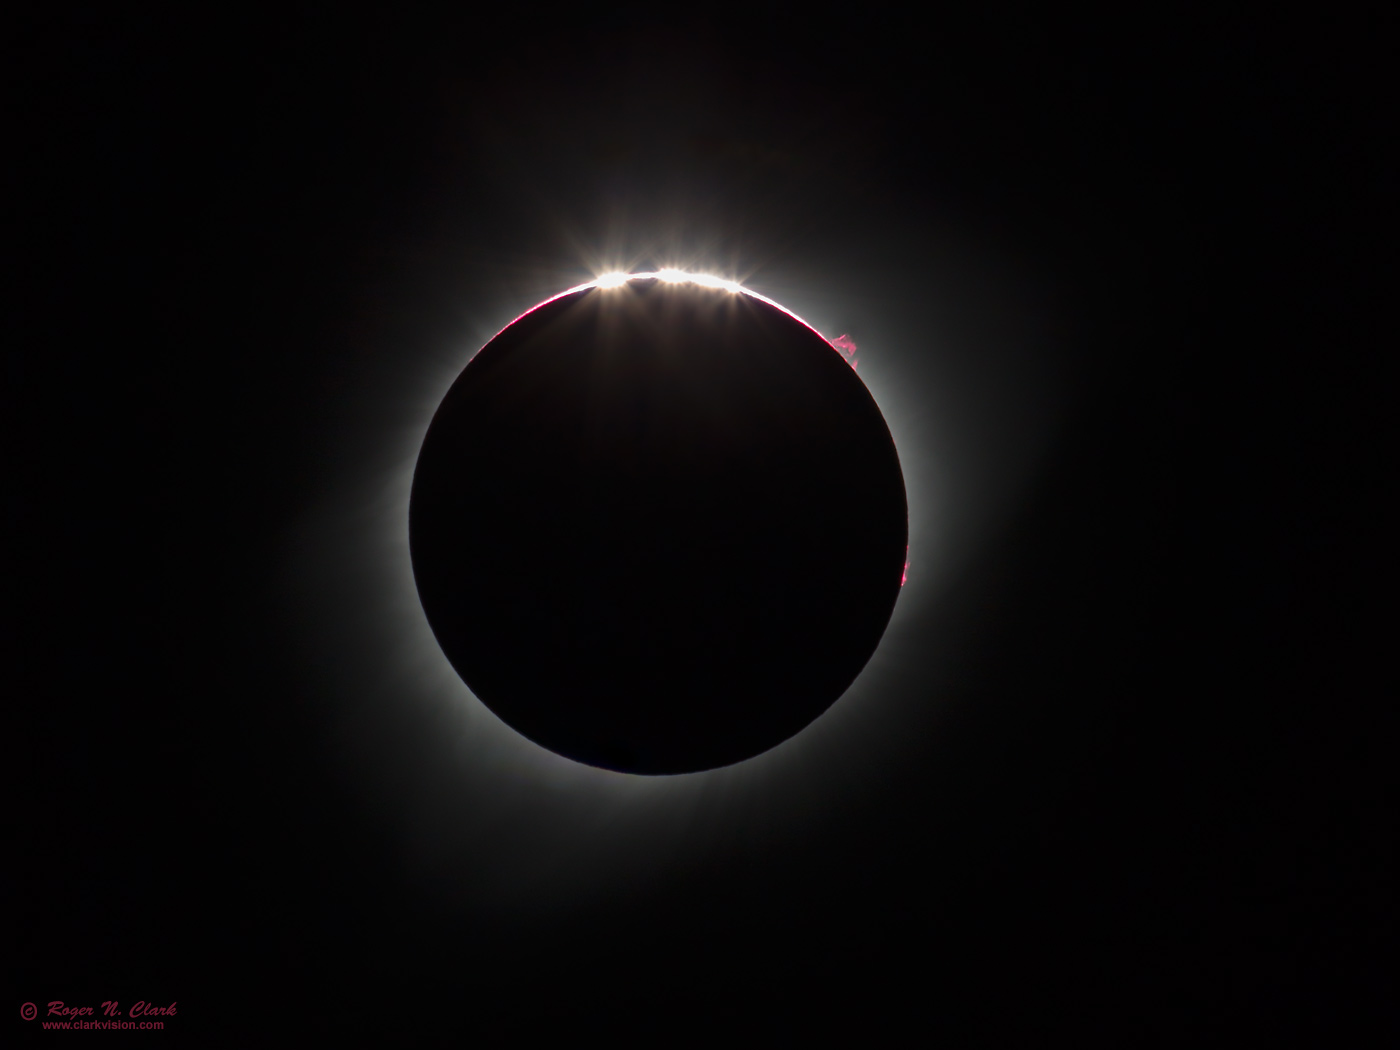 image solar-eclipse-baileysbeads-rnclark.c08.21.2017.IMG_0402-rl.g-c2-0.5xs.jpg is Copyrighted by Roger N. Clark, www.clarkvision.com